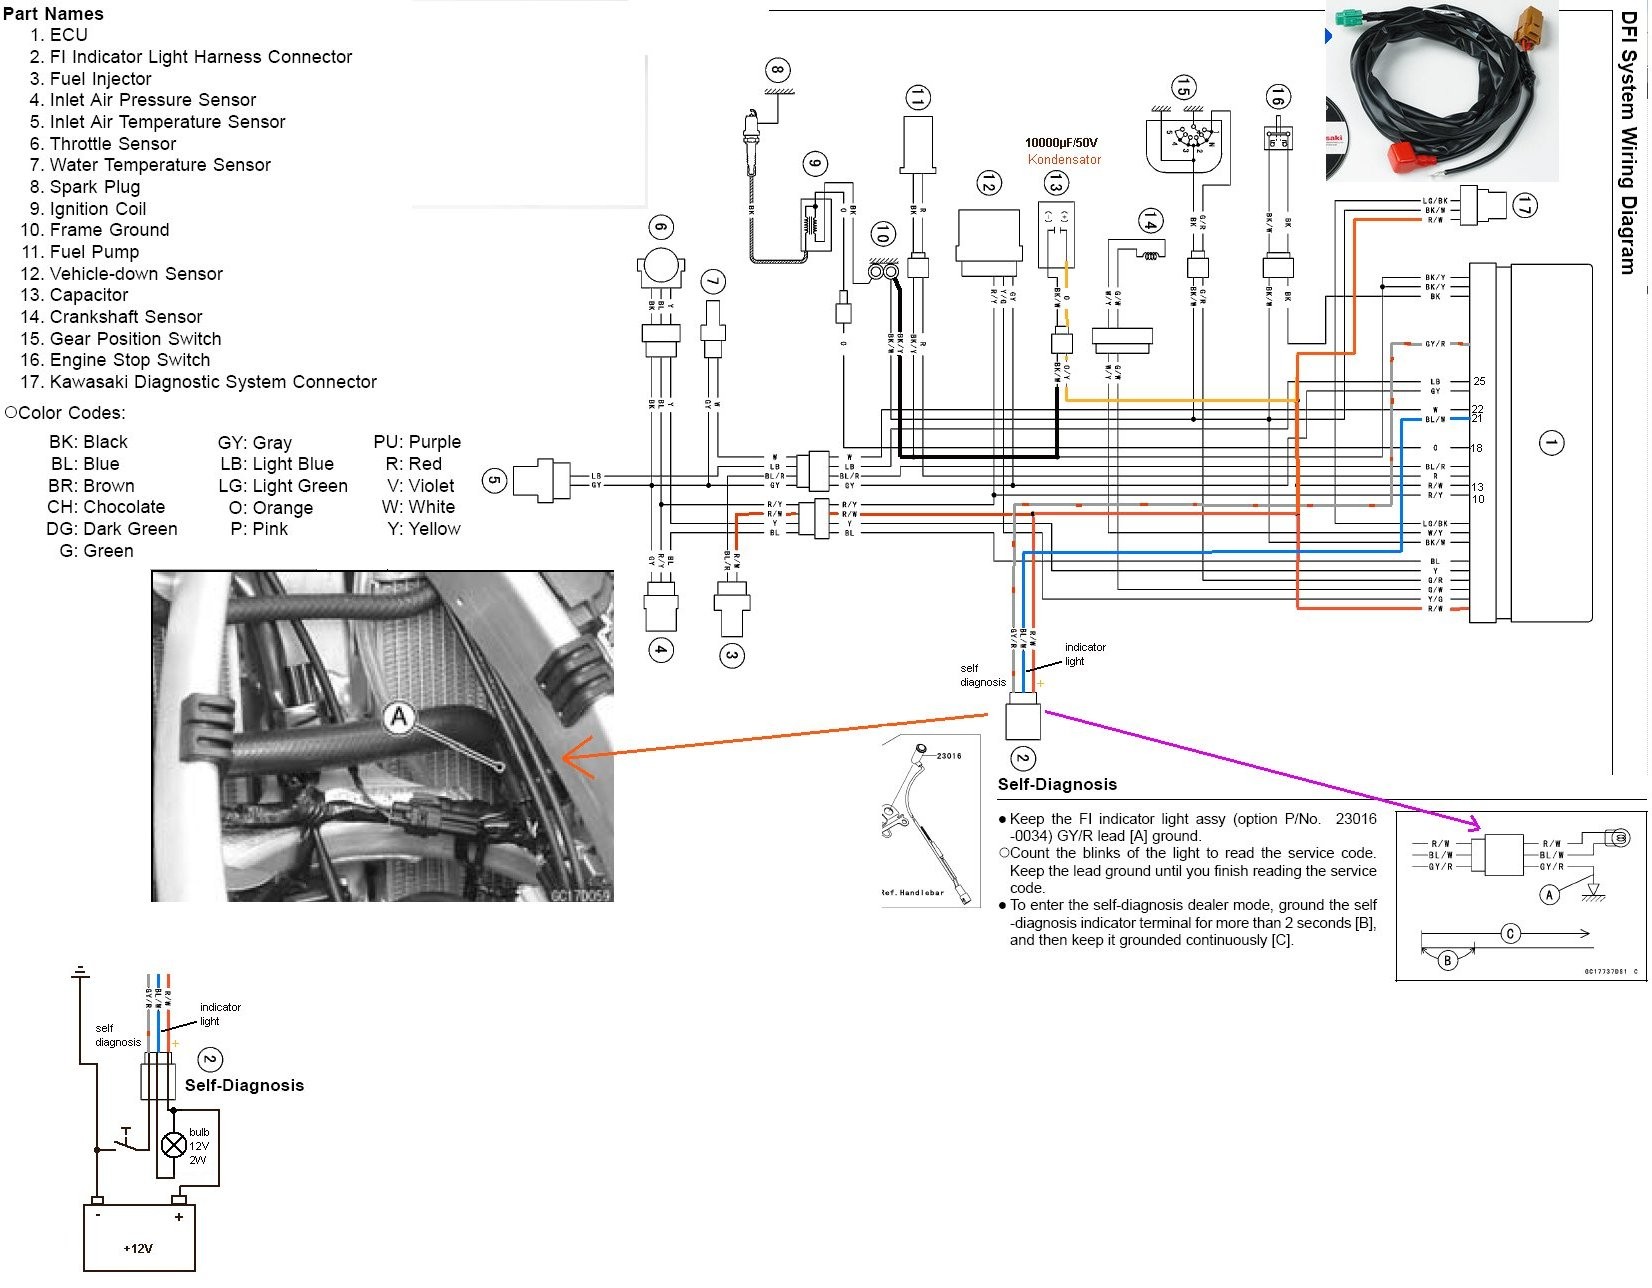 Kx 250 Engine Diagram | My Wiring DIagram